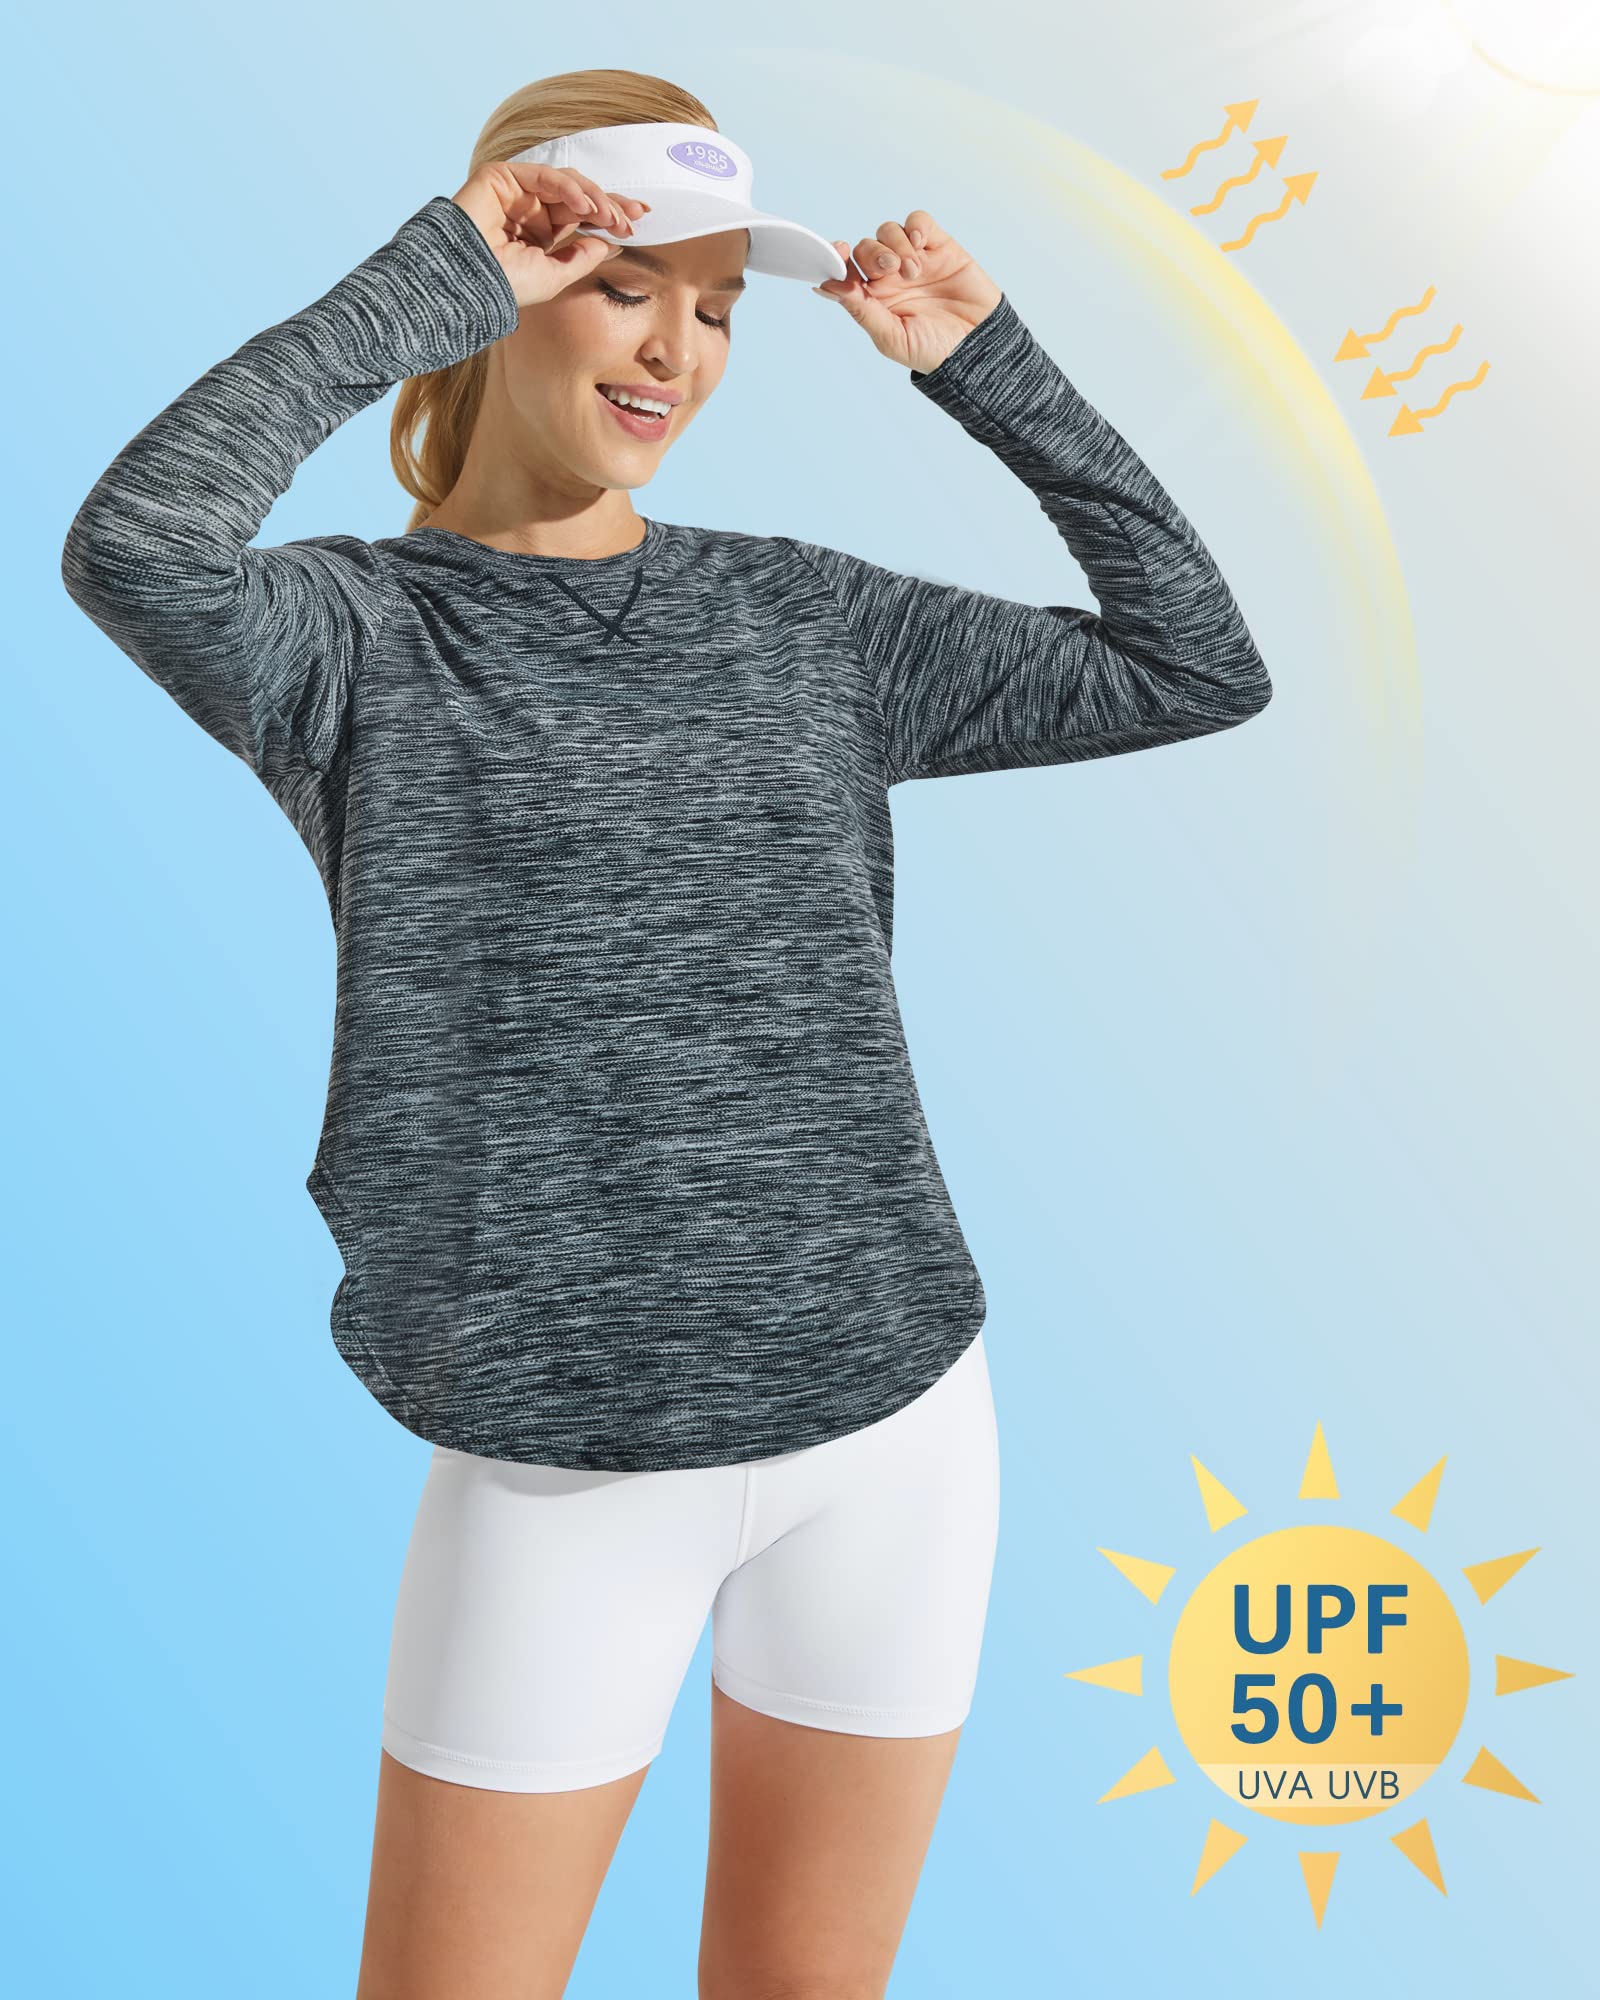  G4Free Womens Sun Shirt Long Sleeve Workout Tops UPF 50+  Outdoor Gym Hiking UV Shirts Quick Dry Lightweight